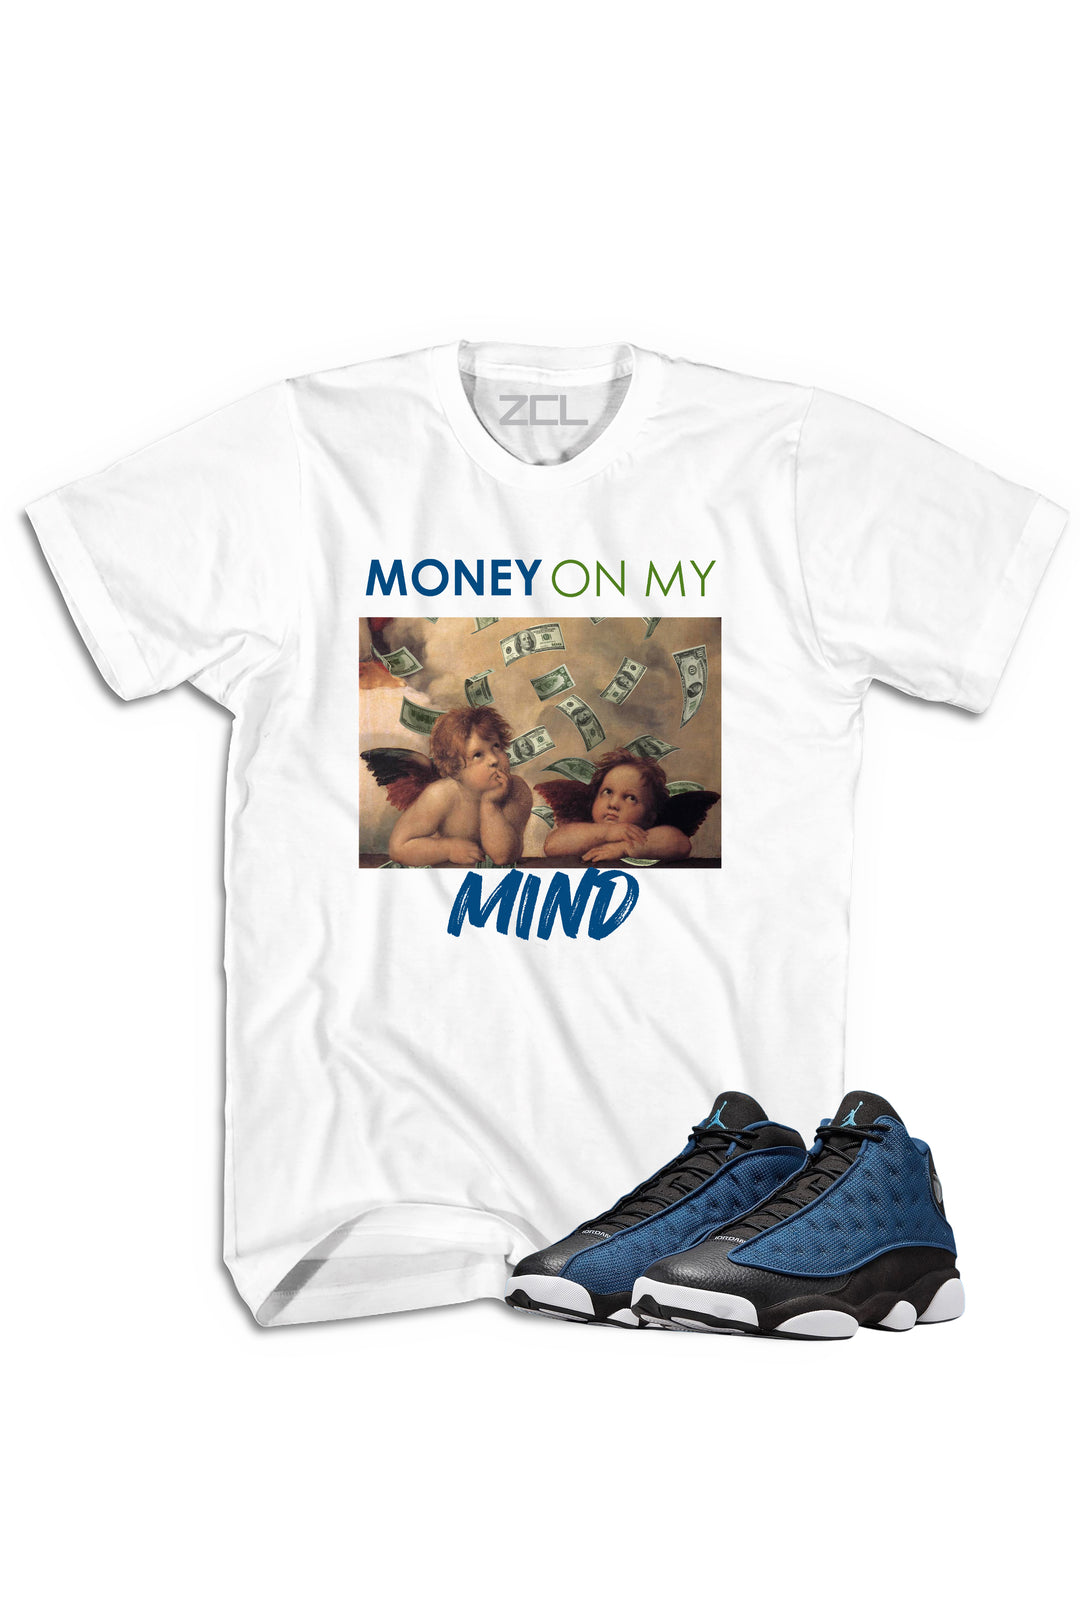 Air Jordan 13 "Money On My Mind" Tee Brave Blue - Zamage